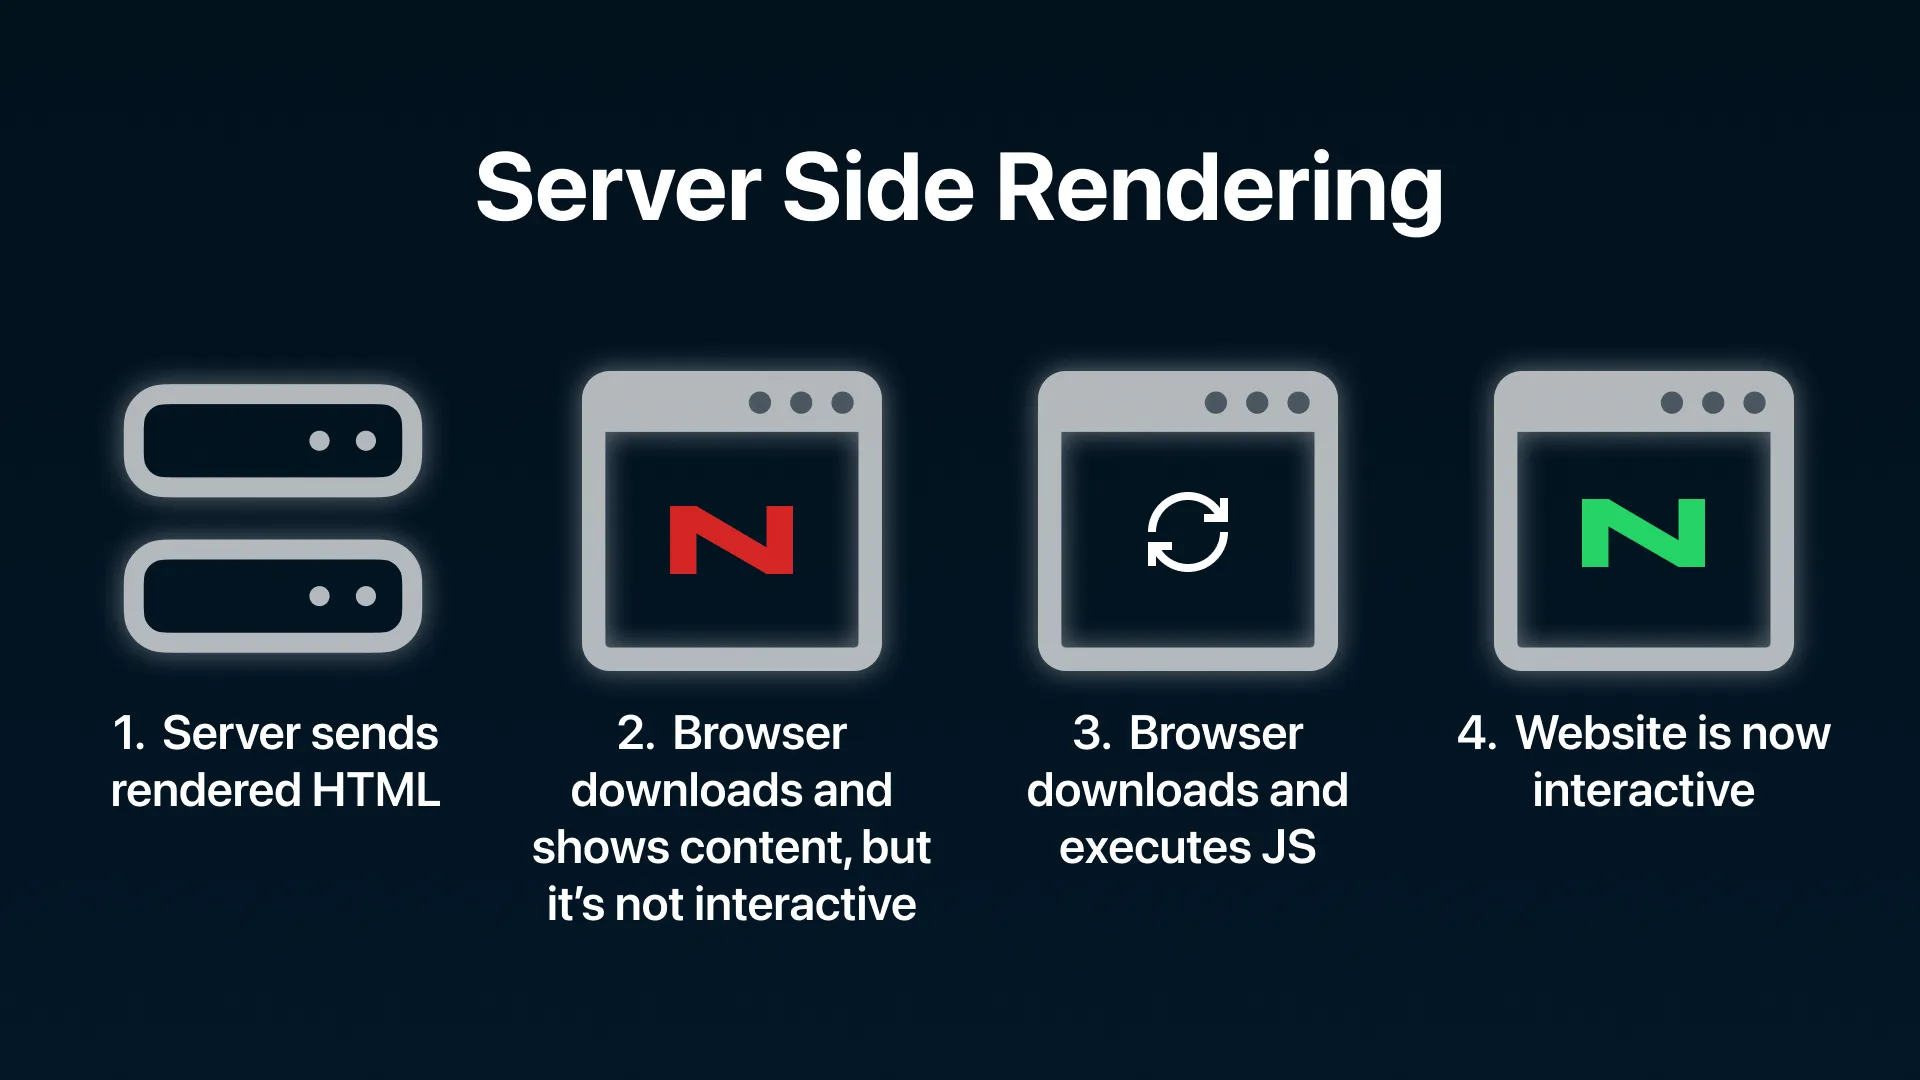 Server Side Rendering Diagram, by Novatura